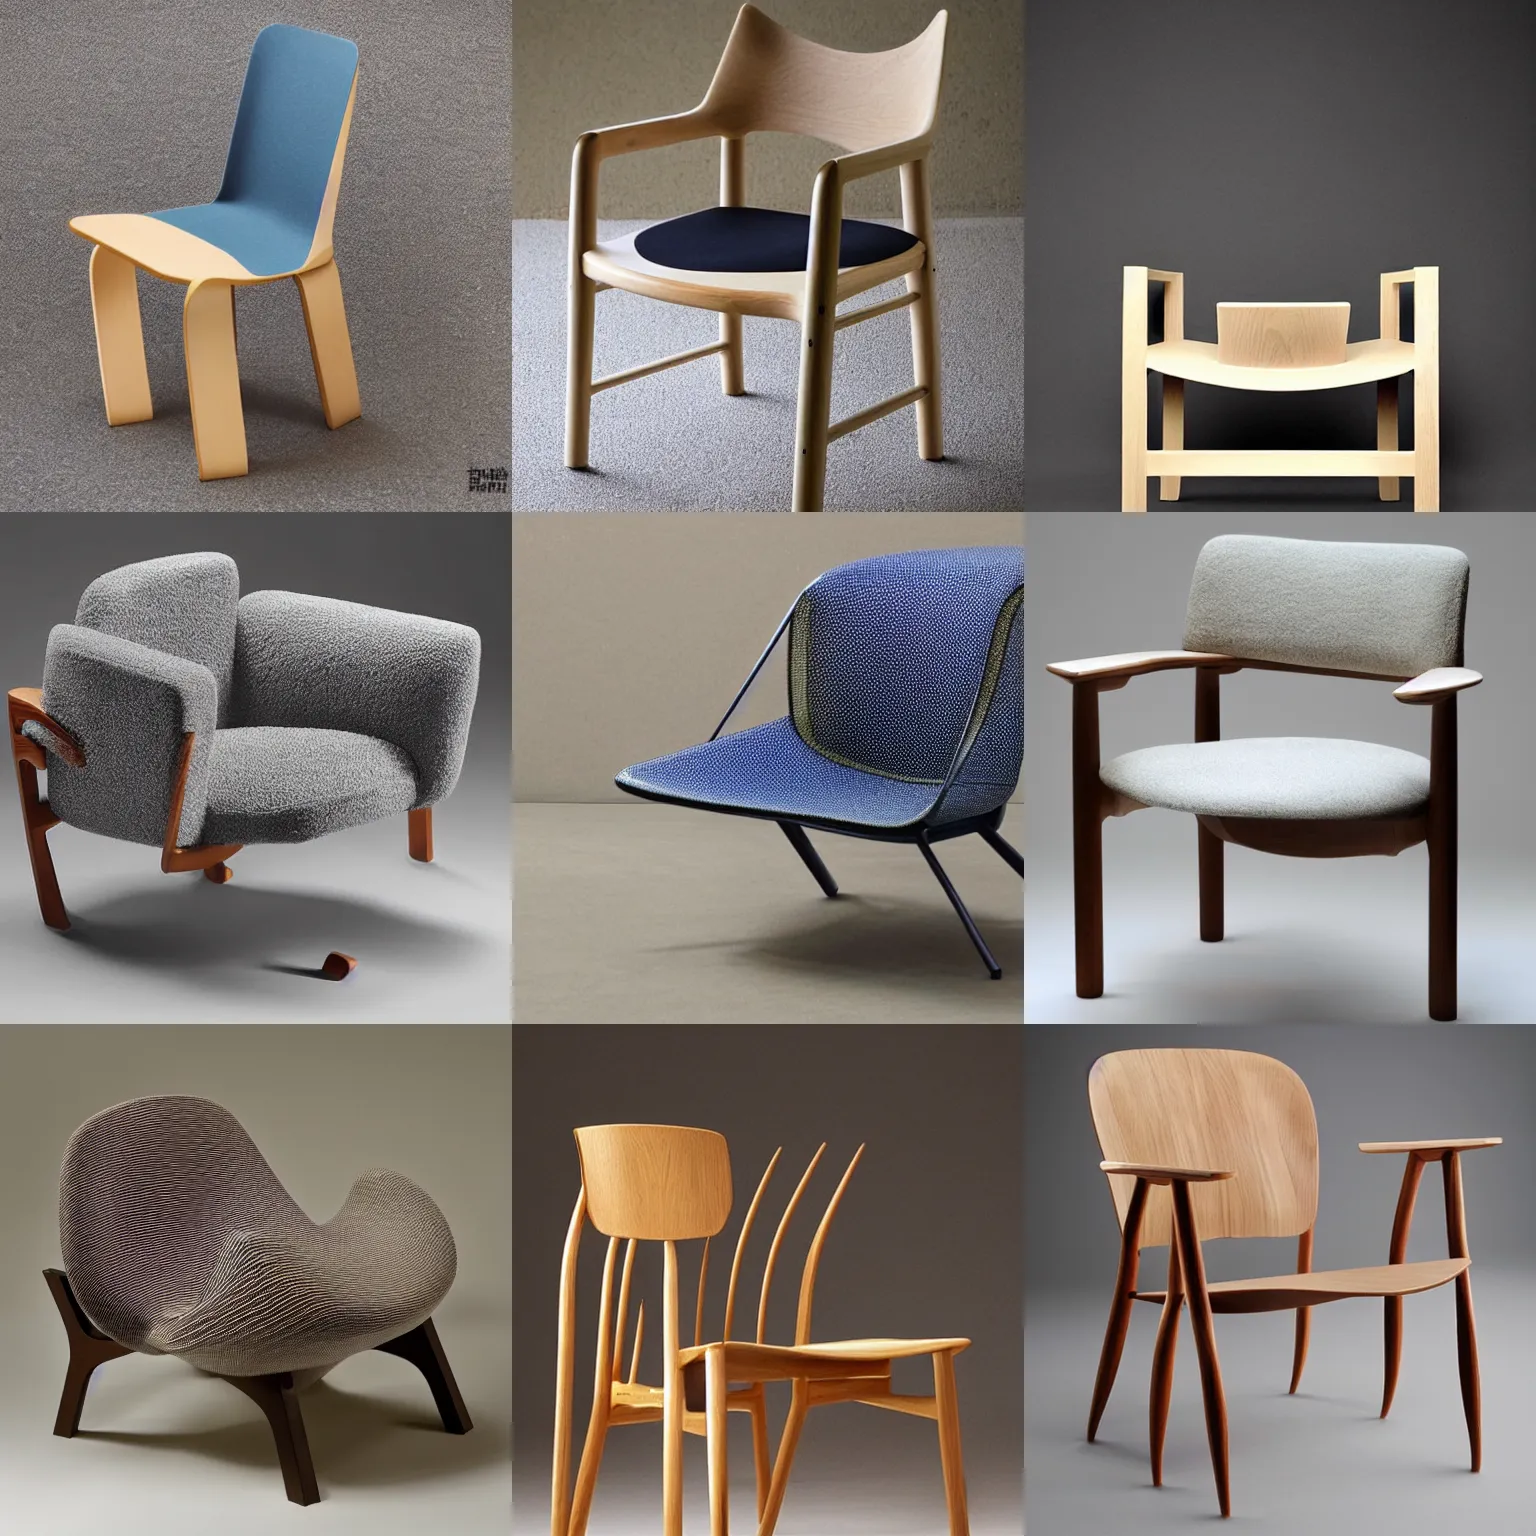 Prompt: a beautiful chair designed by naoto fukosawa